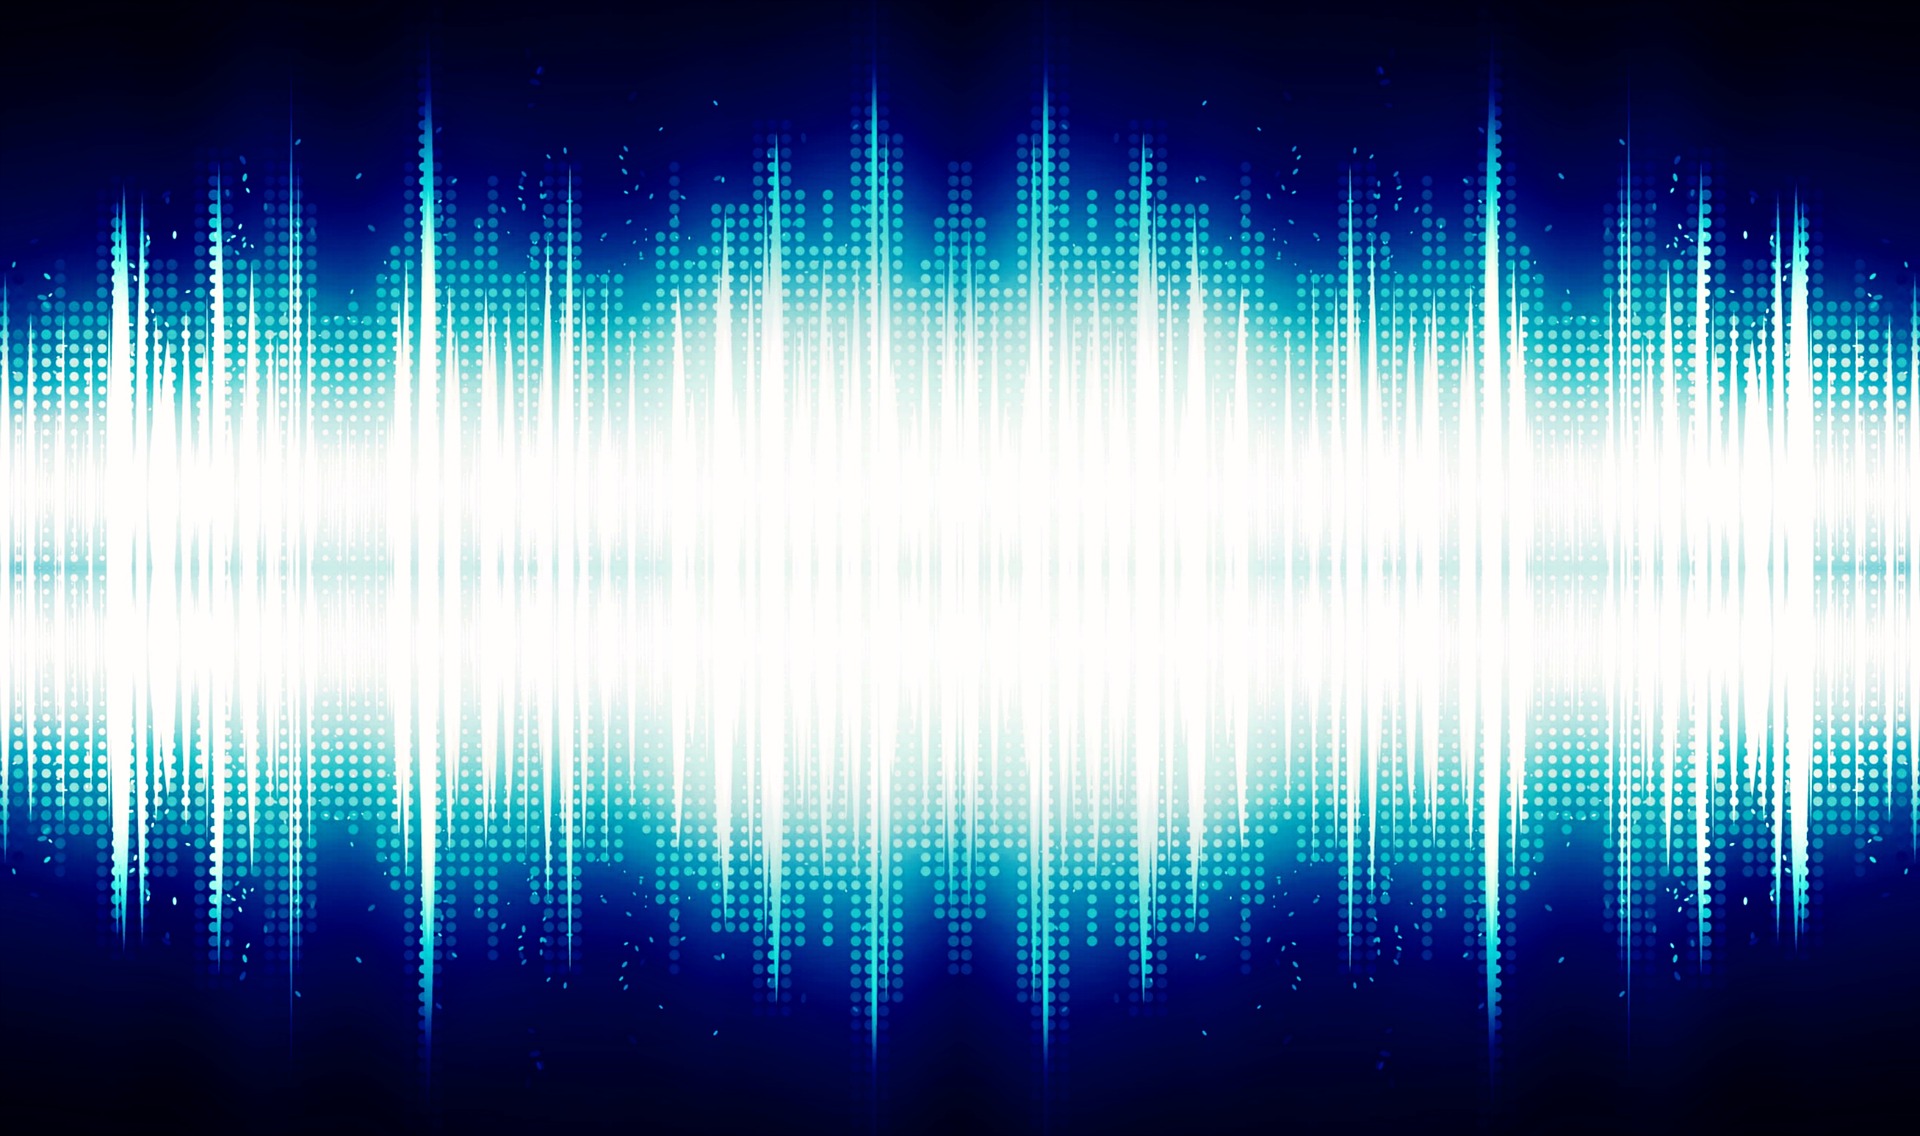 Image - Sound waves illustration. (Credit: Mary Theresa McLean/Pixabay)